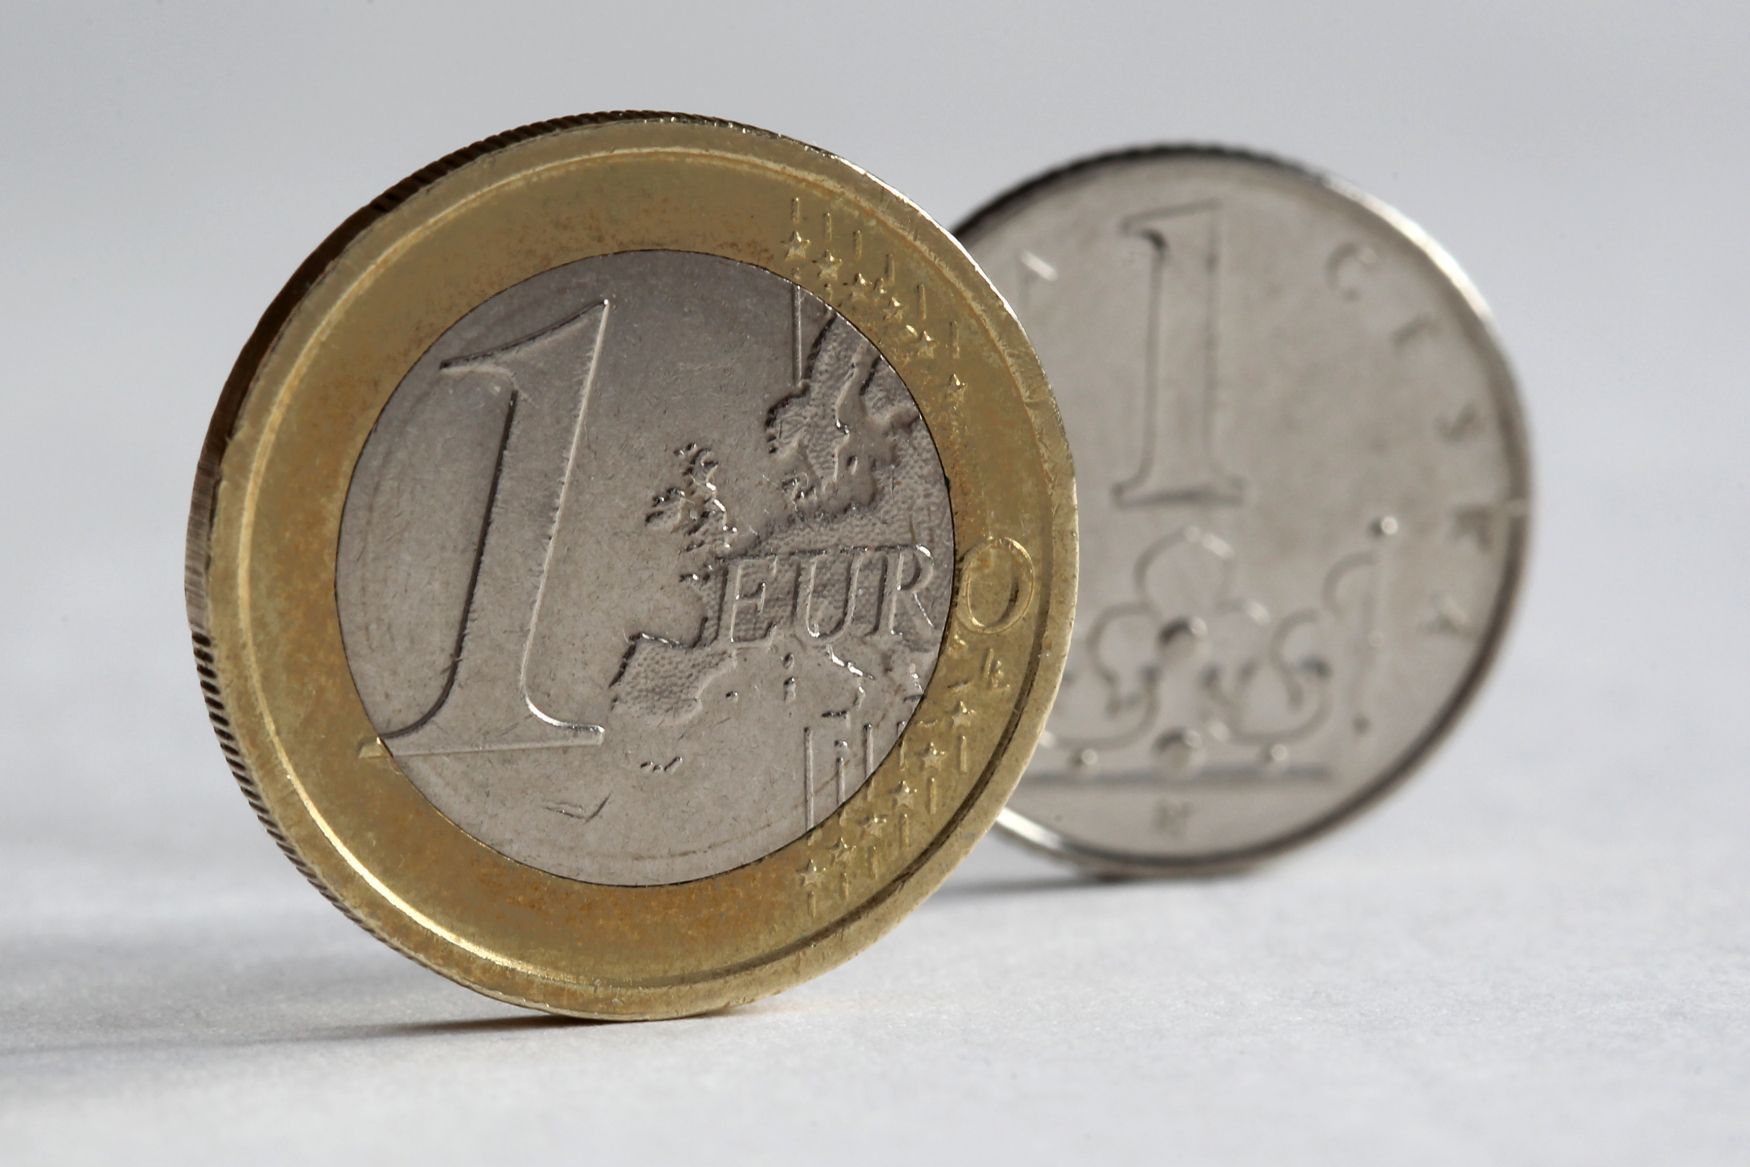 Koruna, euro - ilustrační foto